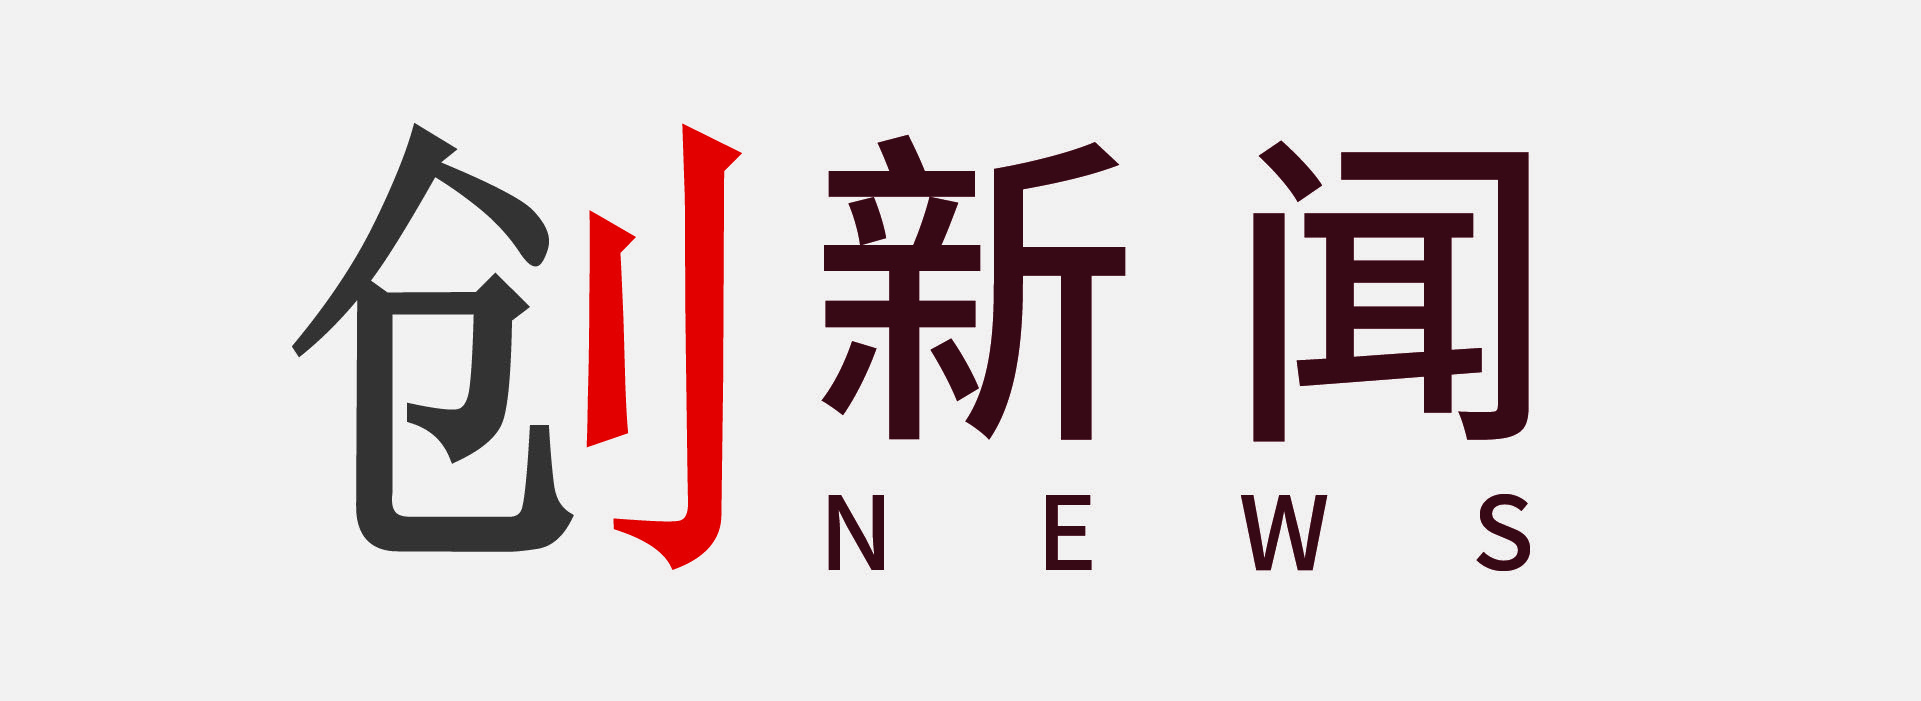 Alt text: China Growth Capital News 华创资本新闻 Beijing Venture Capital